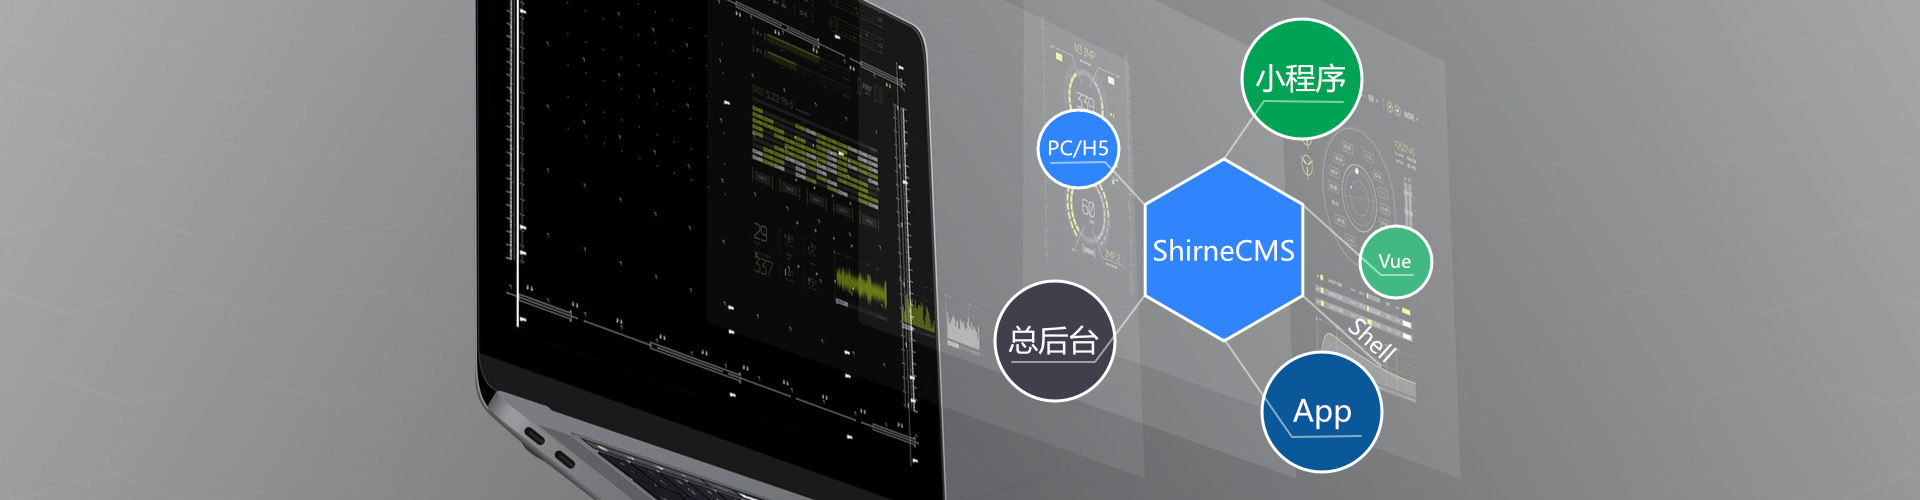 ShirneCMS 全平台内容管理系统